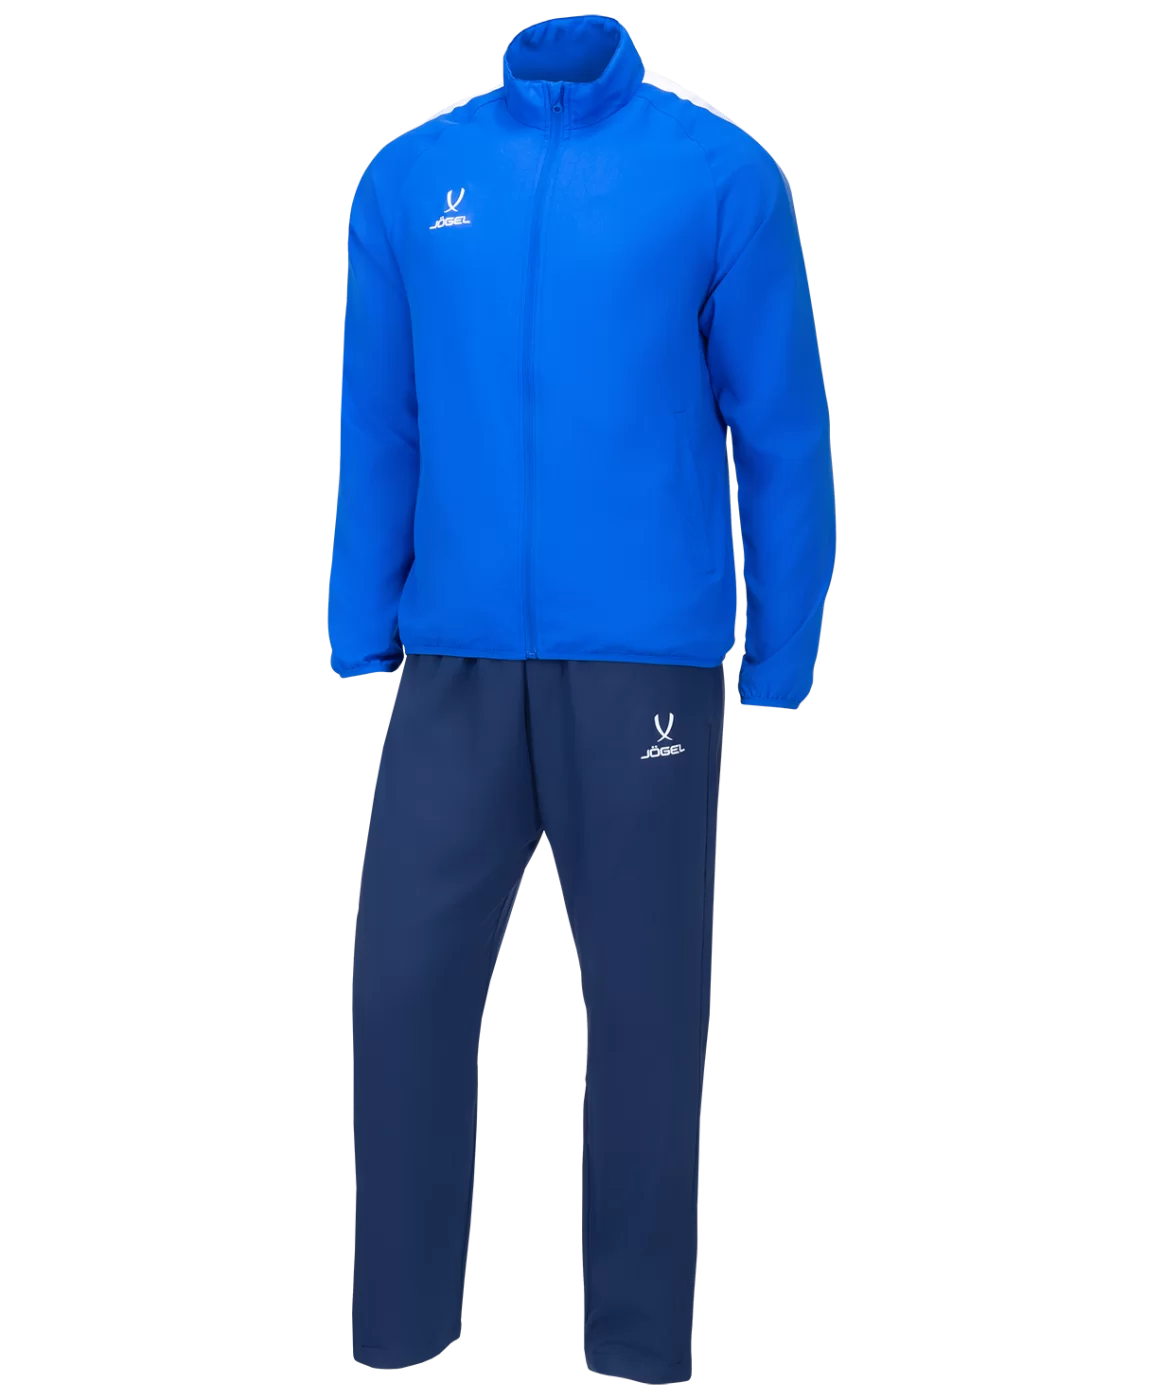 Фото Костюм спортивный CAMP Lined Suit, синий/темно-синий Jögel со склада магазина СпортЕВ